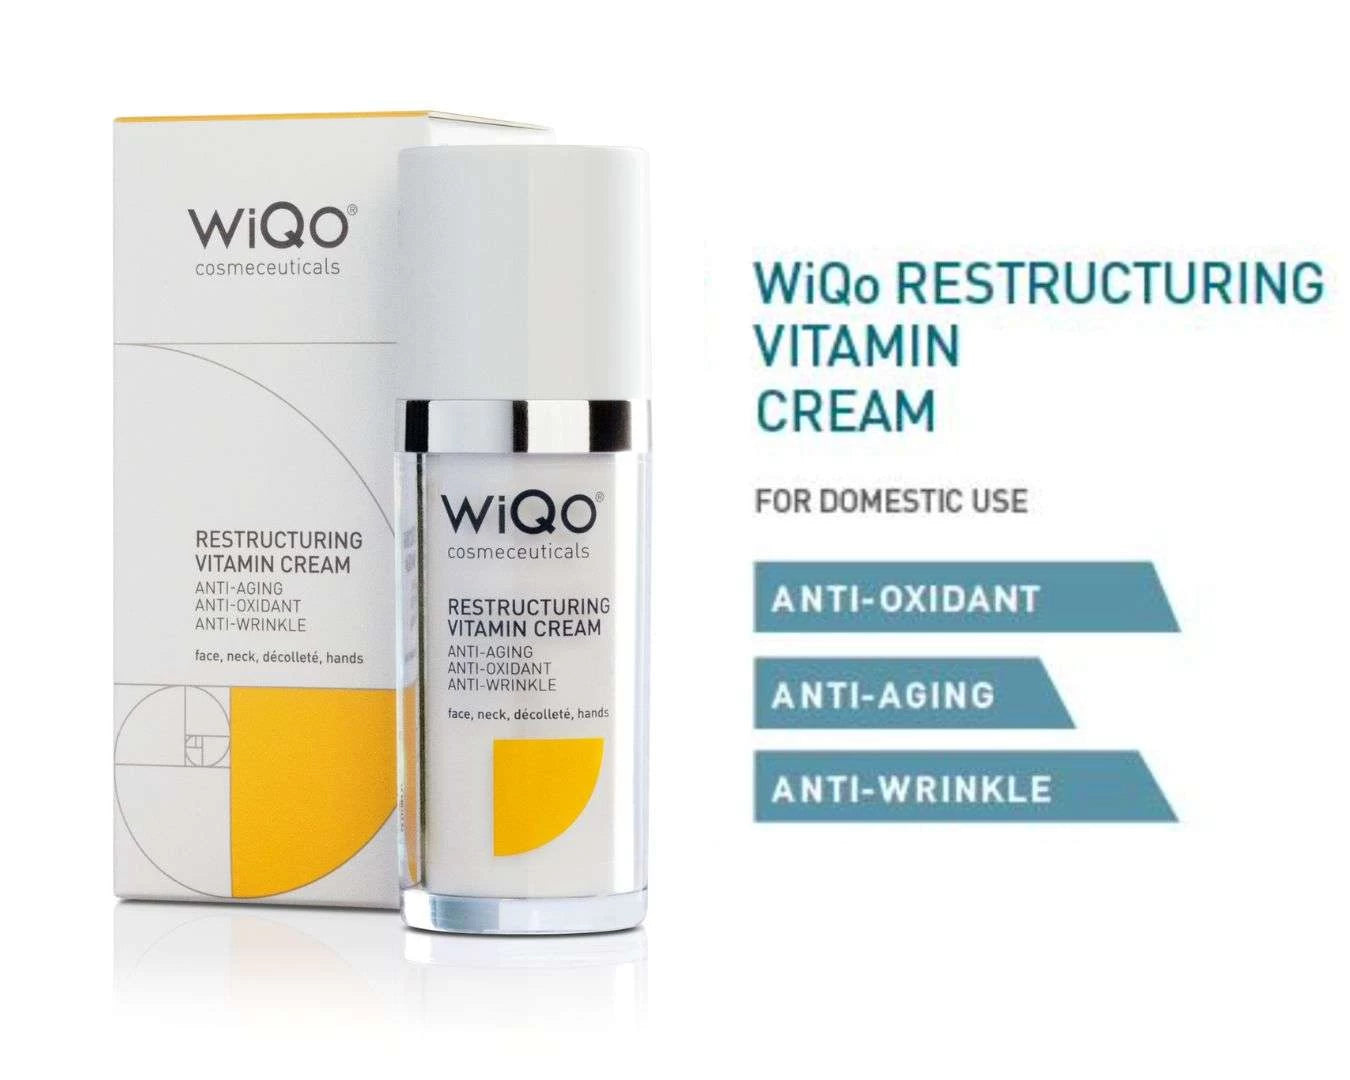 WiQo Restructuring Vitamin Cream